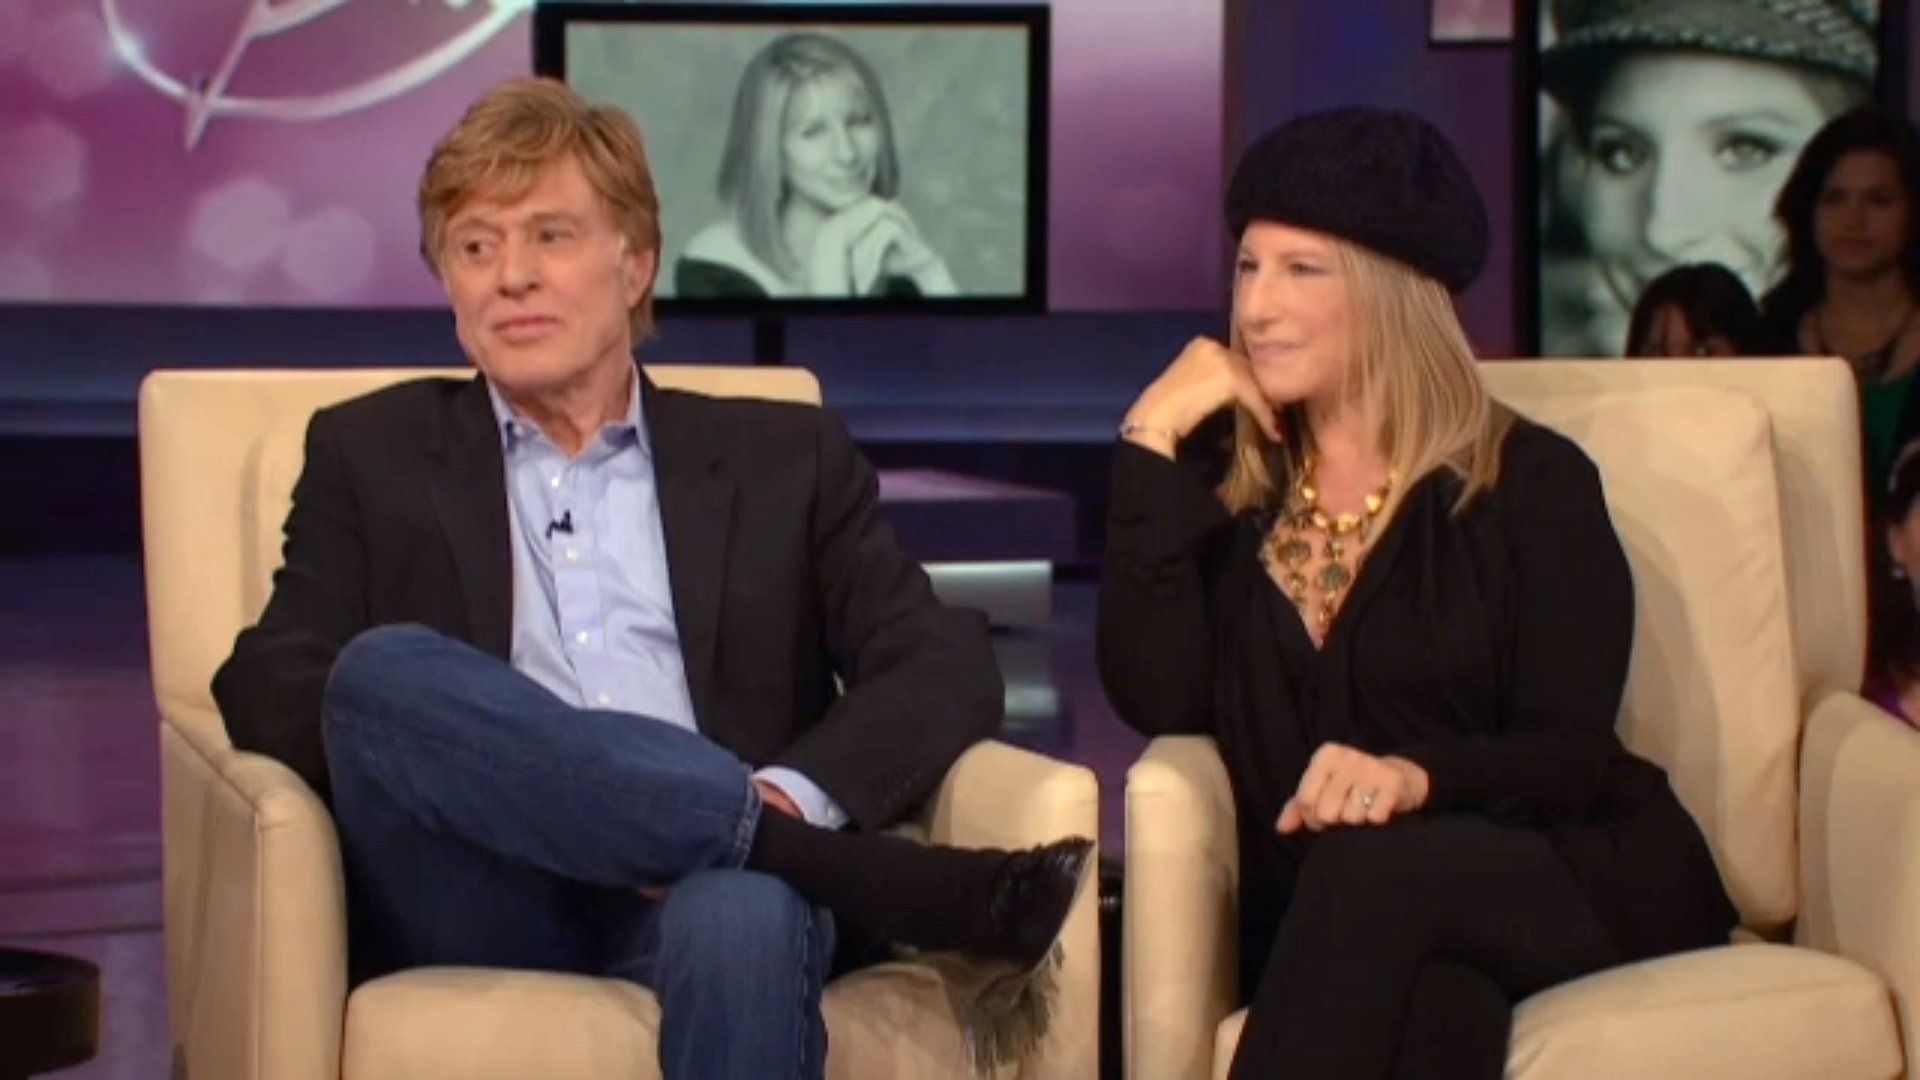 Streisand and Redford reunited on the 2010 Oprah Winfrey show.